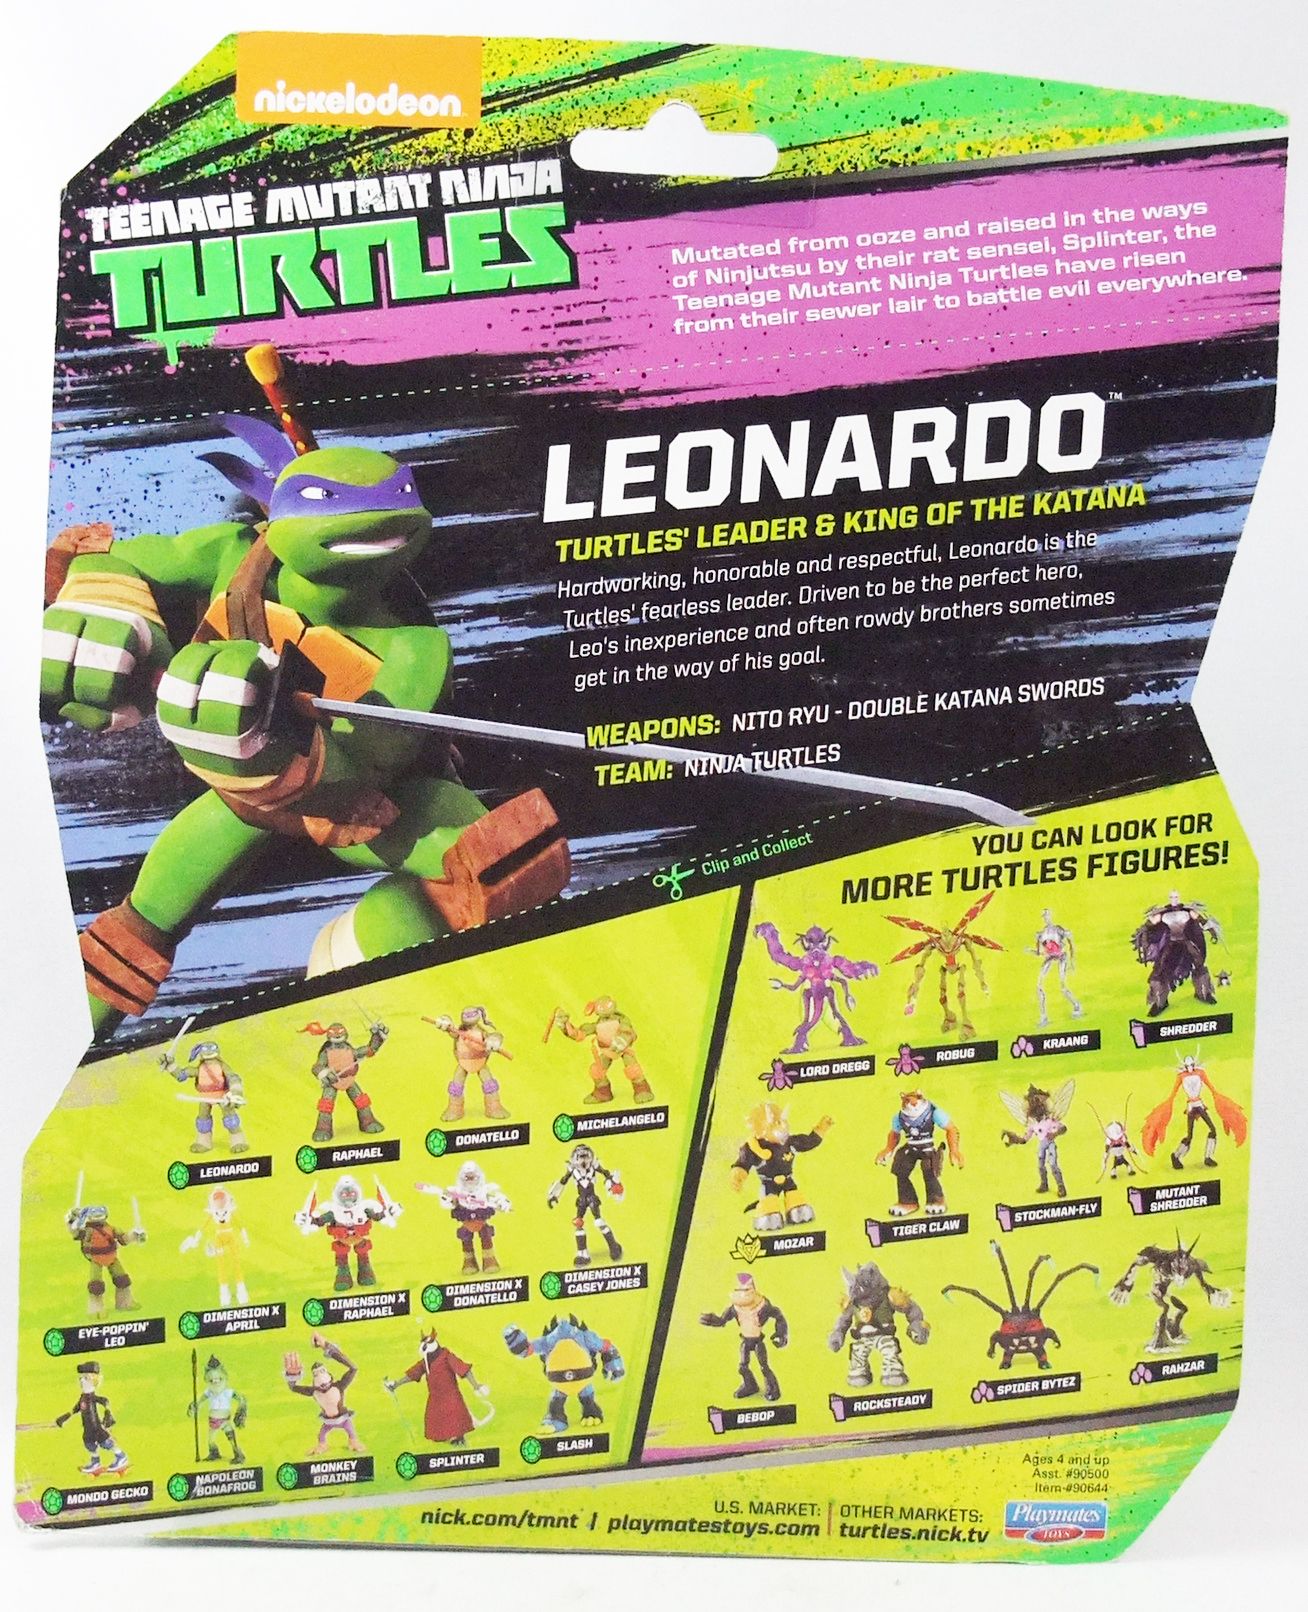 teenage mutant ninja turtles DONATELLO 2012 eyes Nickelodeon tmnt